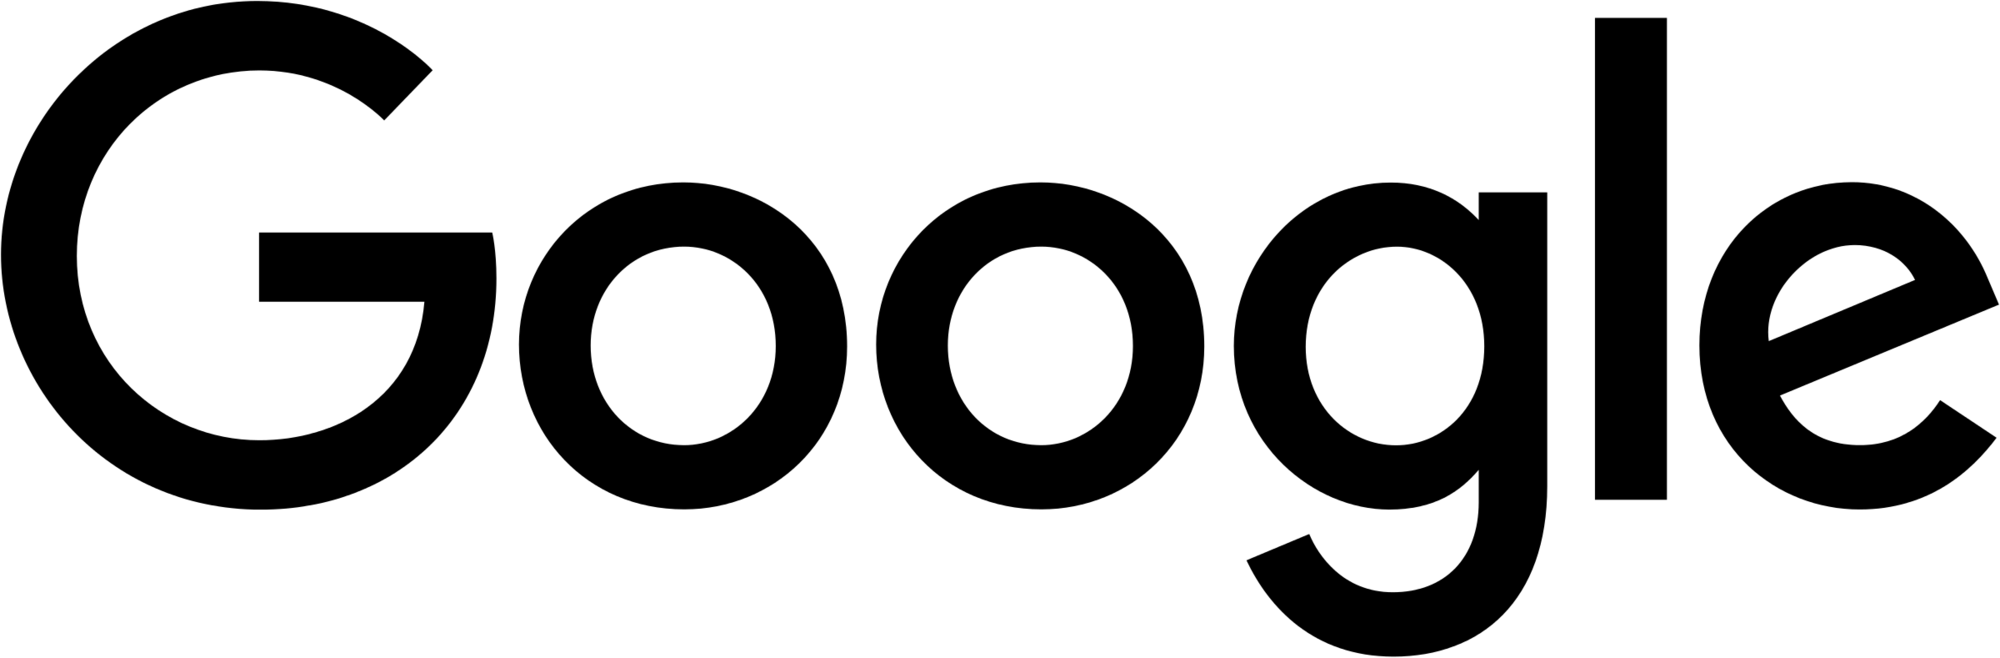 Custom Google Logo - Google logo in black and white – Custom Signs, Monument Signs, & LED ...